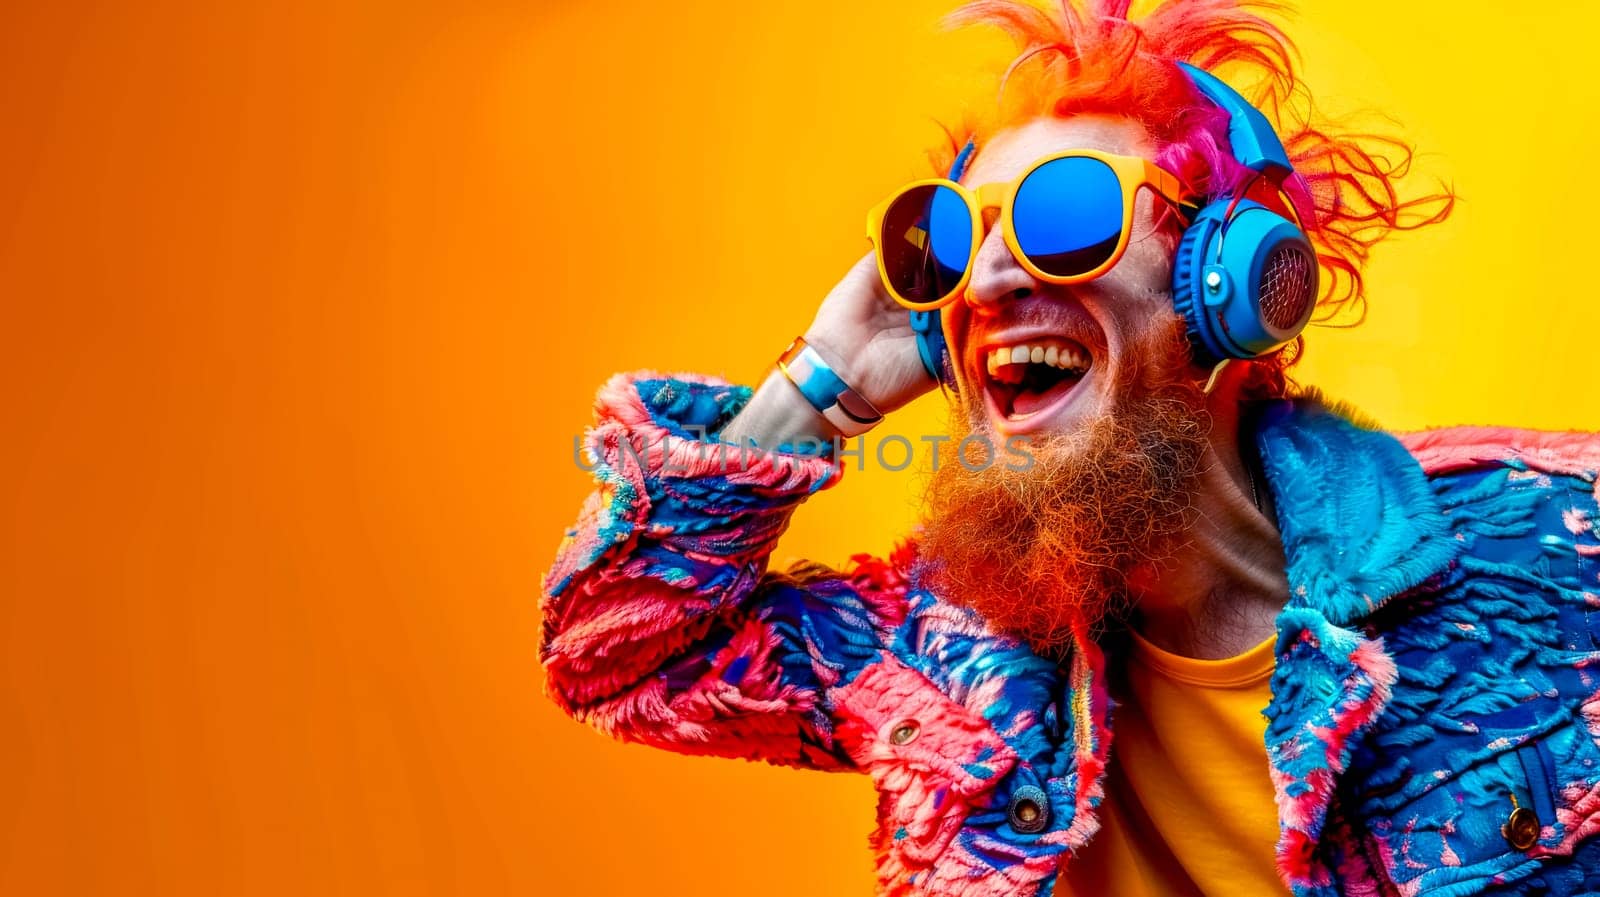 Eclectic man enjoying music on bright background by Edophoto